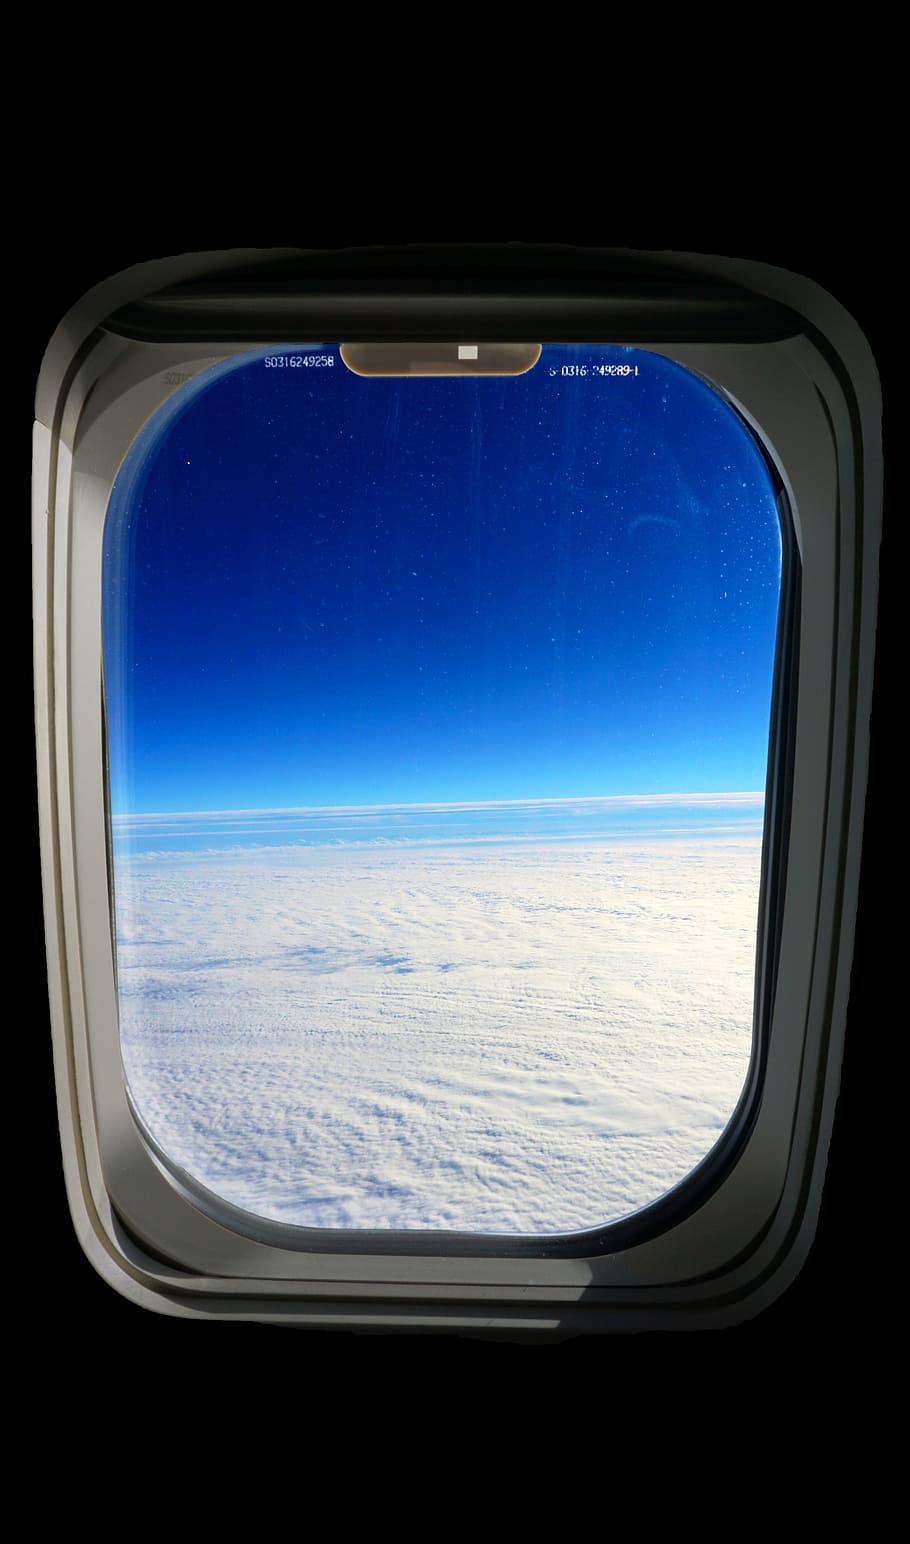 Sky, Window, Airplane, airplane window, sky window, space, day sky, globe, clouds, vehicle interior